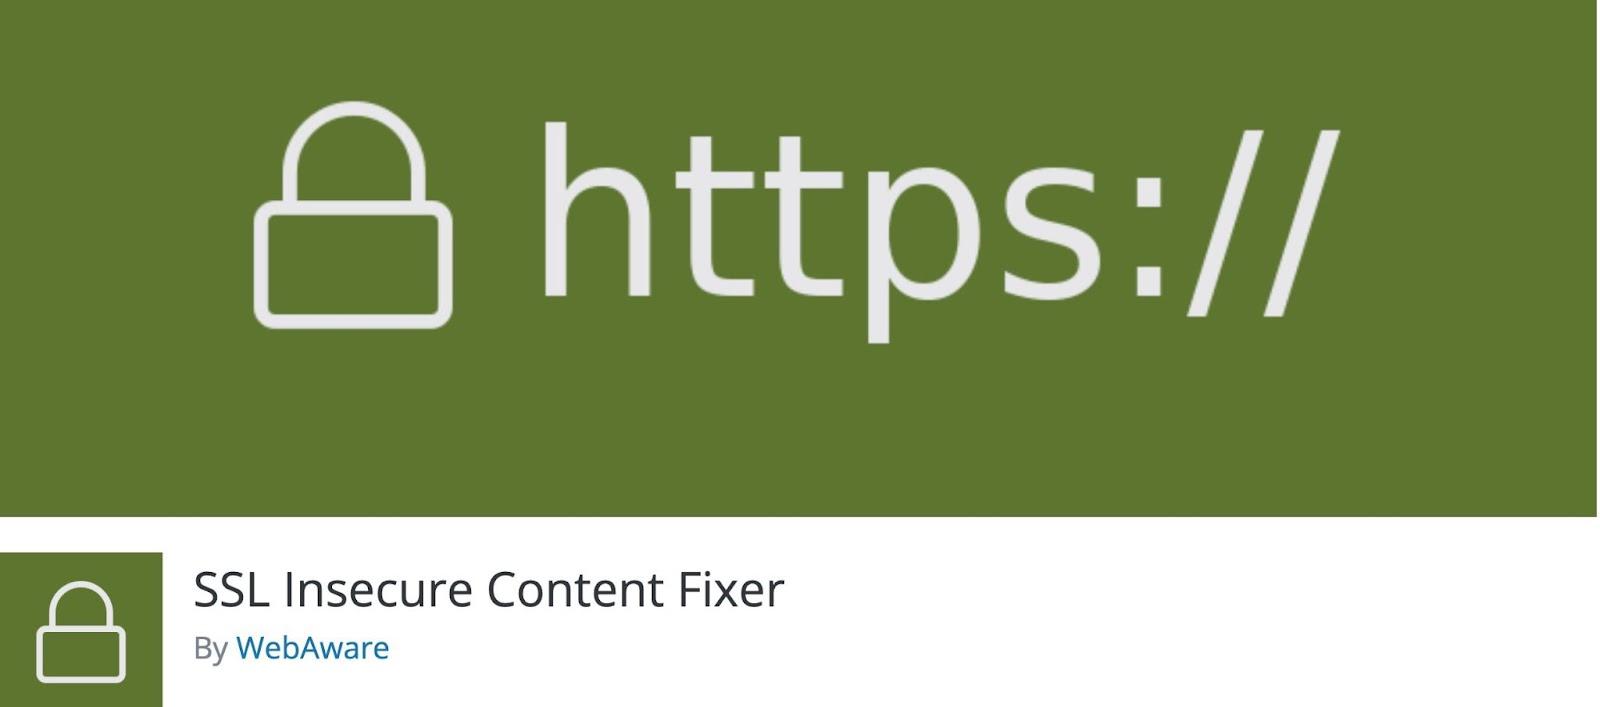 WordPress SSL plugin, the SSL Insecure Content Fixer plugin listing image at WordPress.org.